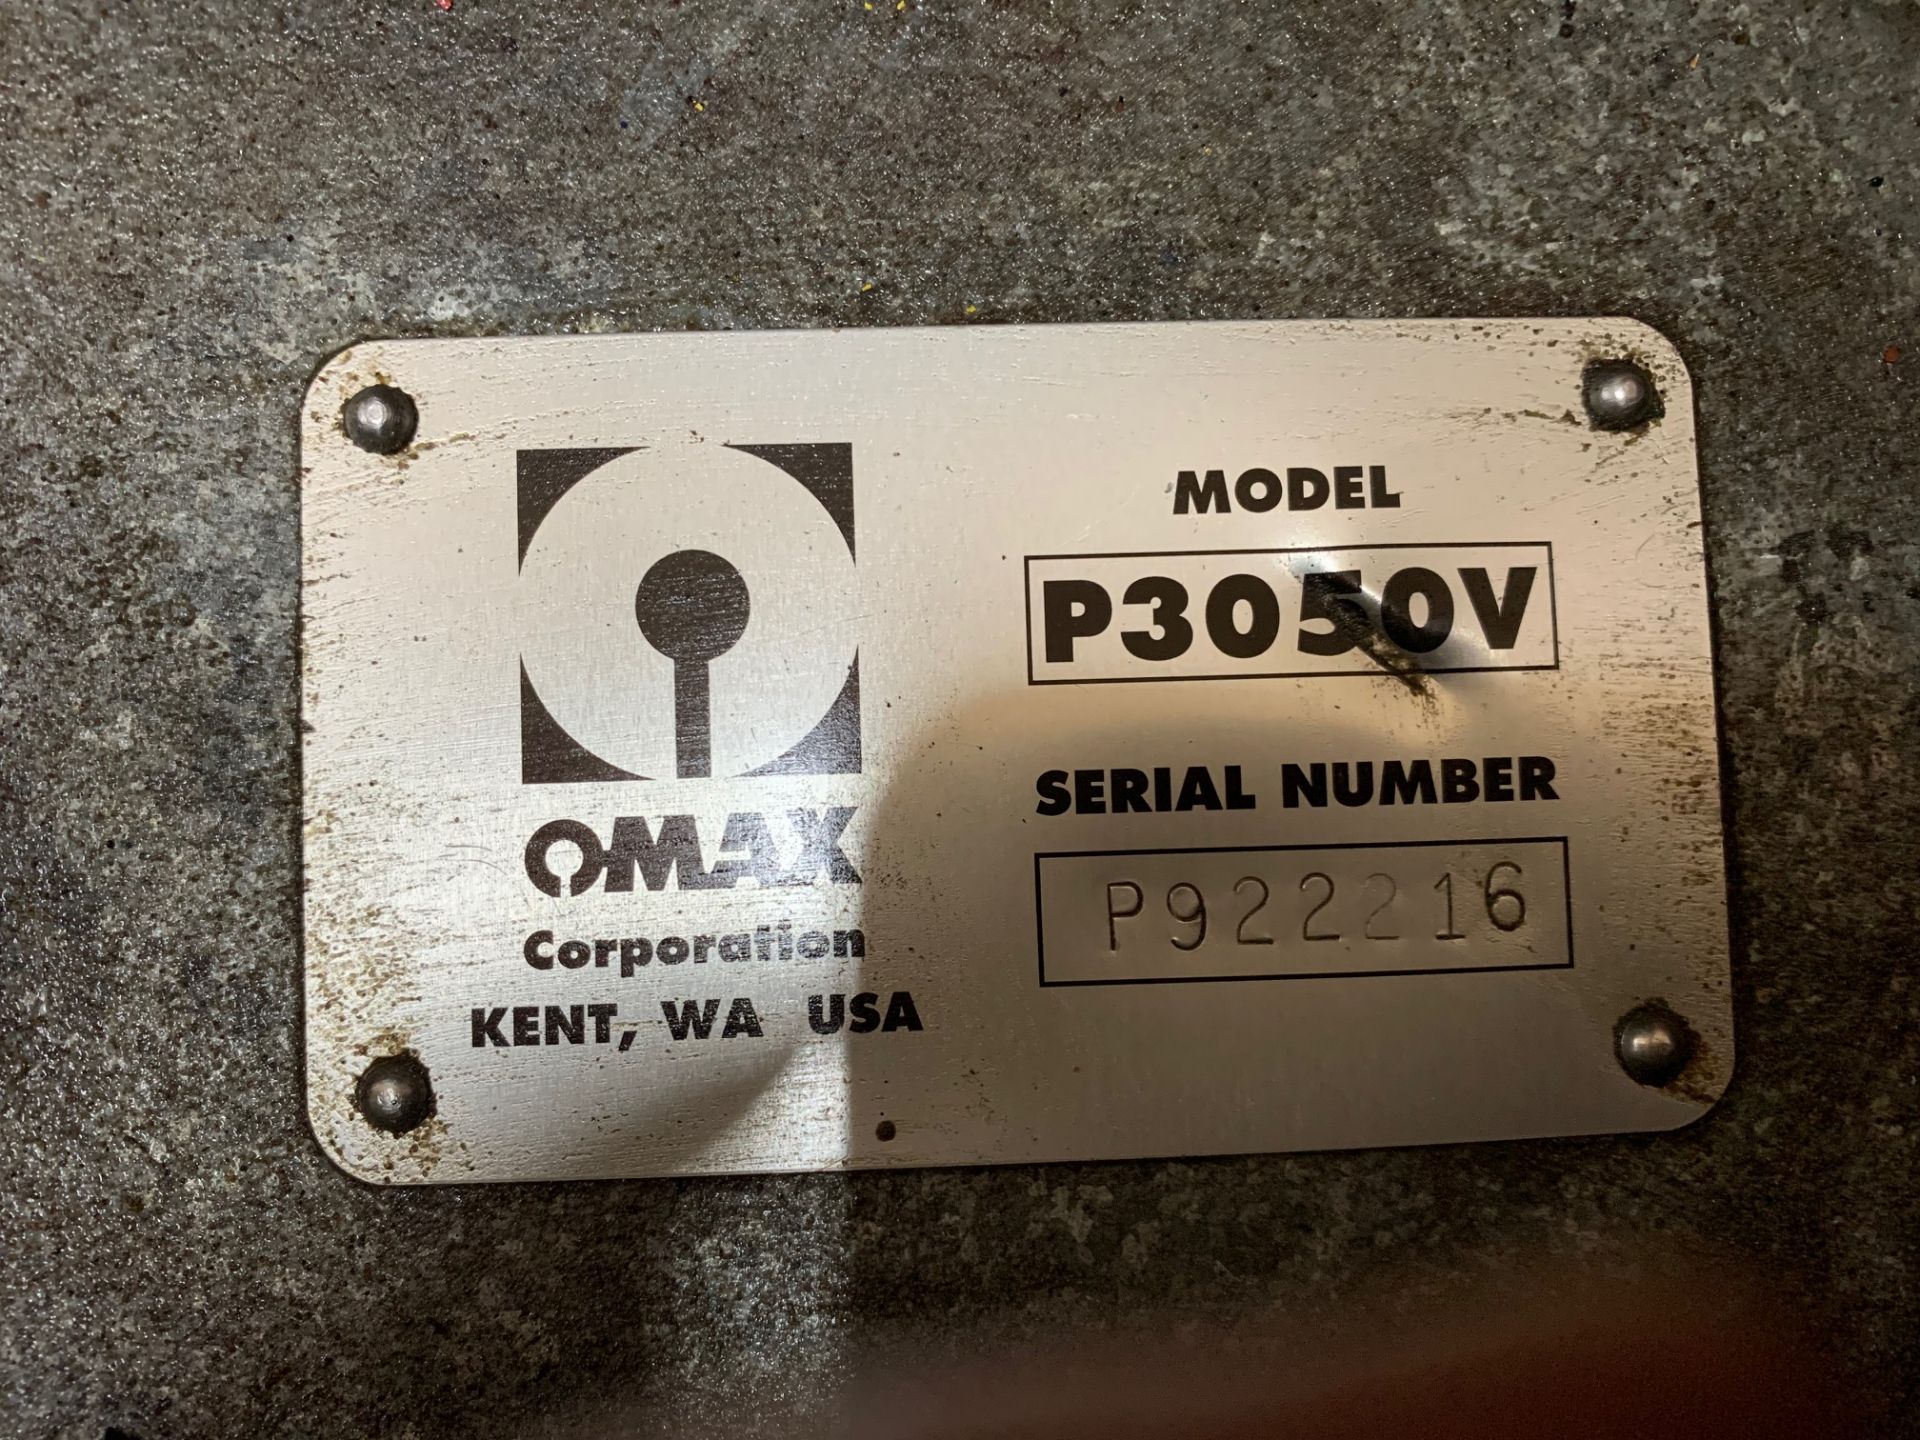 2004 OMAX 80160 JET MACHINING CENTER TILT-A-JET CNC WATERJET, S/N E511529 - Image 26 of 29